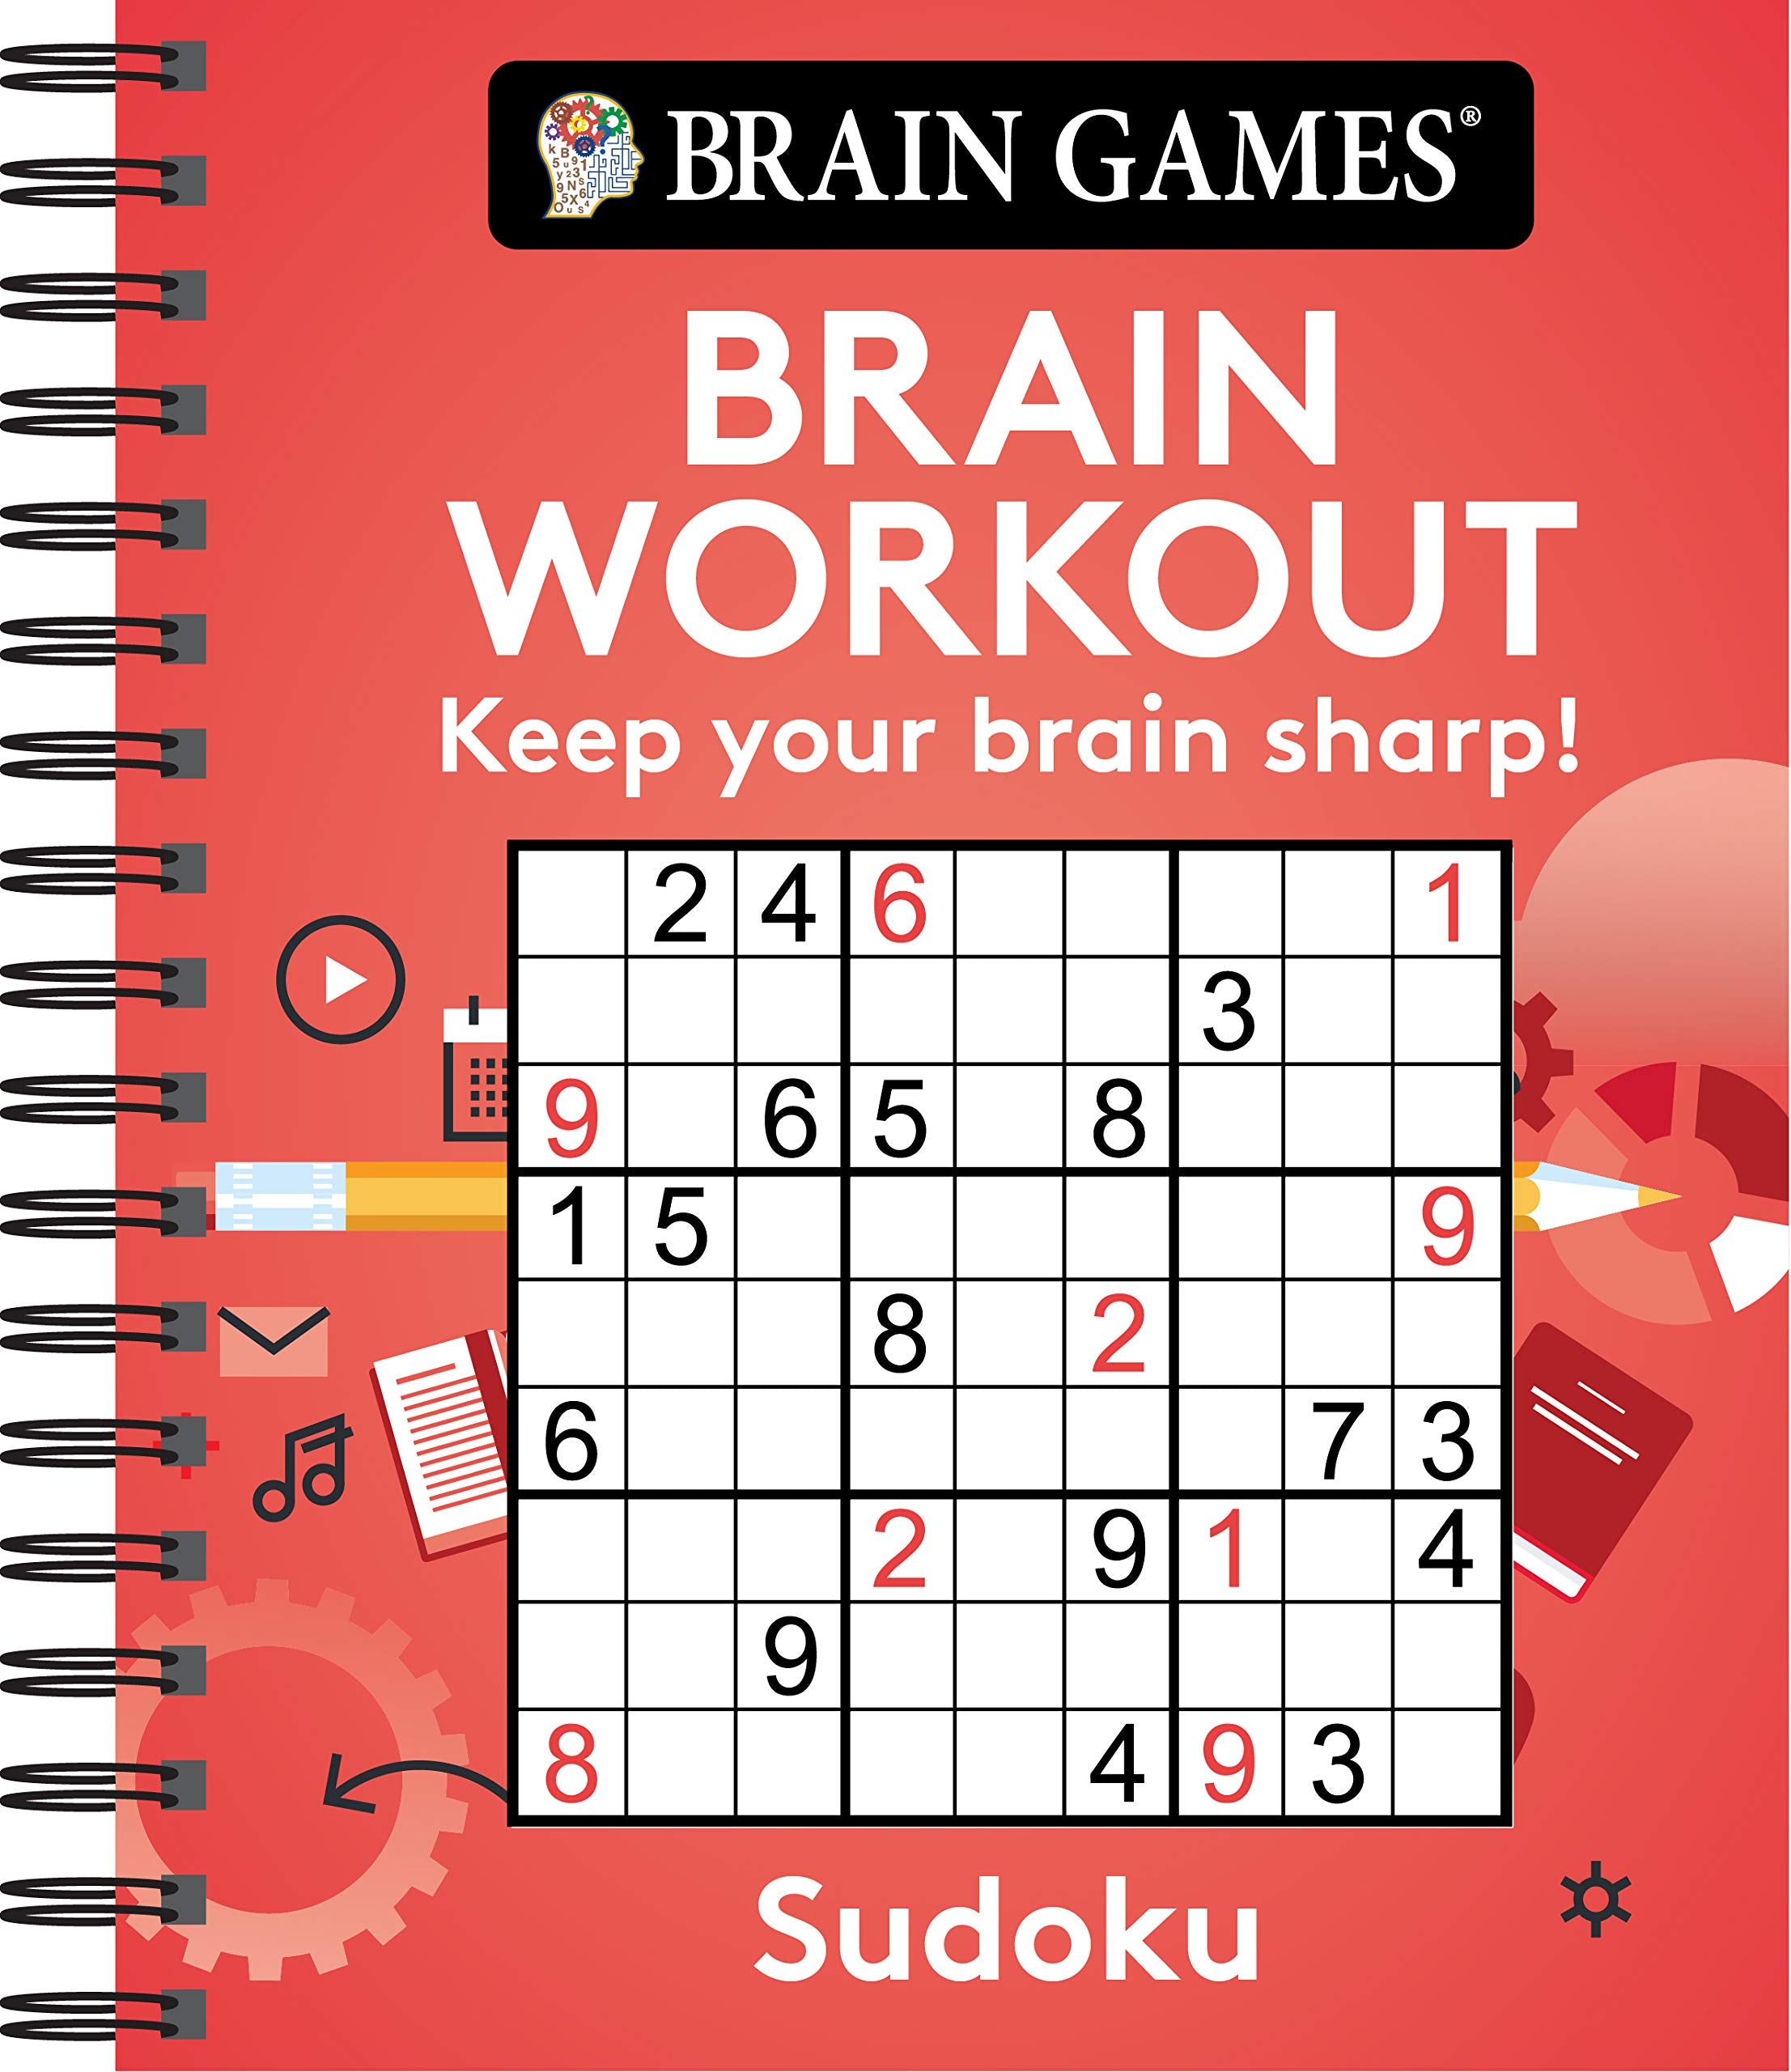 Brain Games - Brain Workout: Sudoku by Publications International Ltd